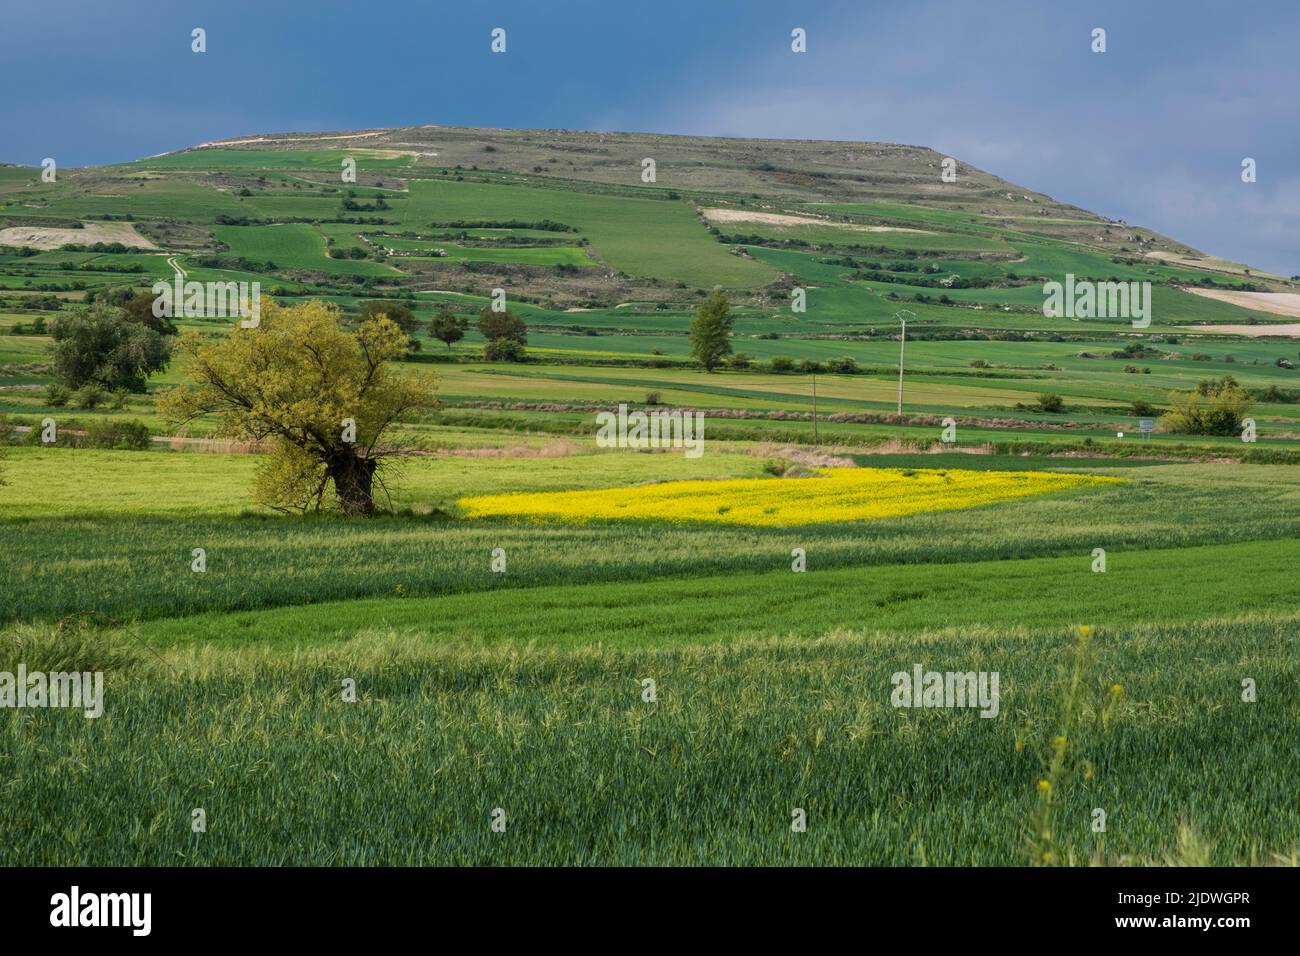 Spain, Castilla y Leon, Farmers' Fields near Castrojeriz on the Camino de Santiago. Canola in foreground. Stock Photo